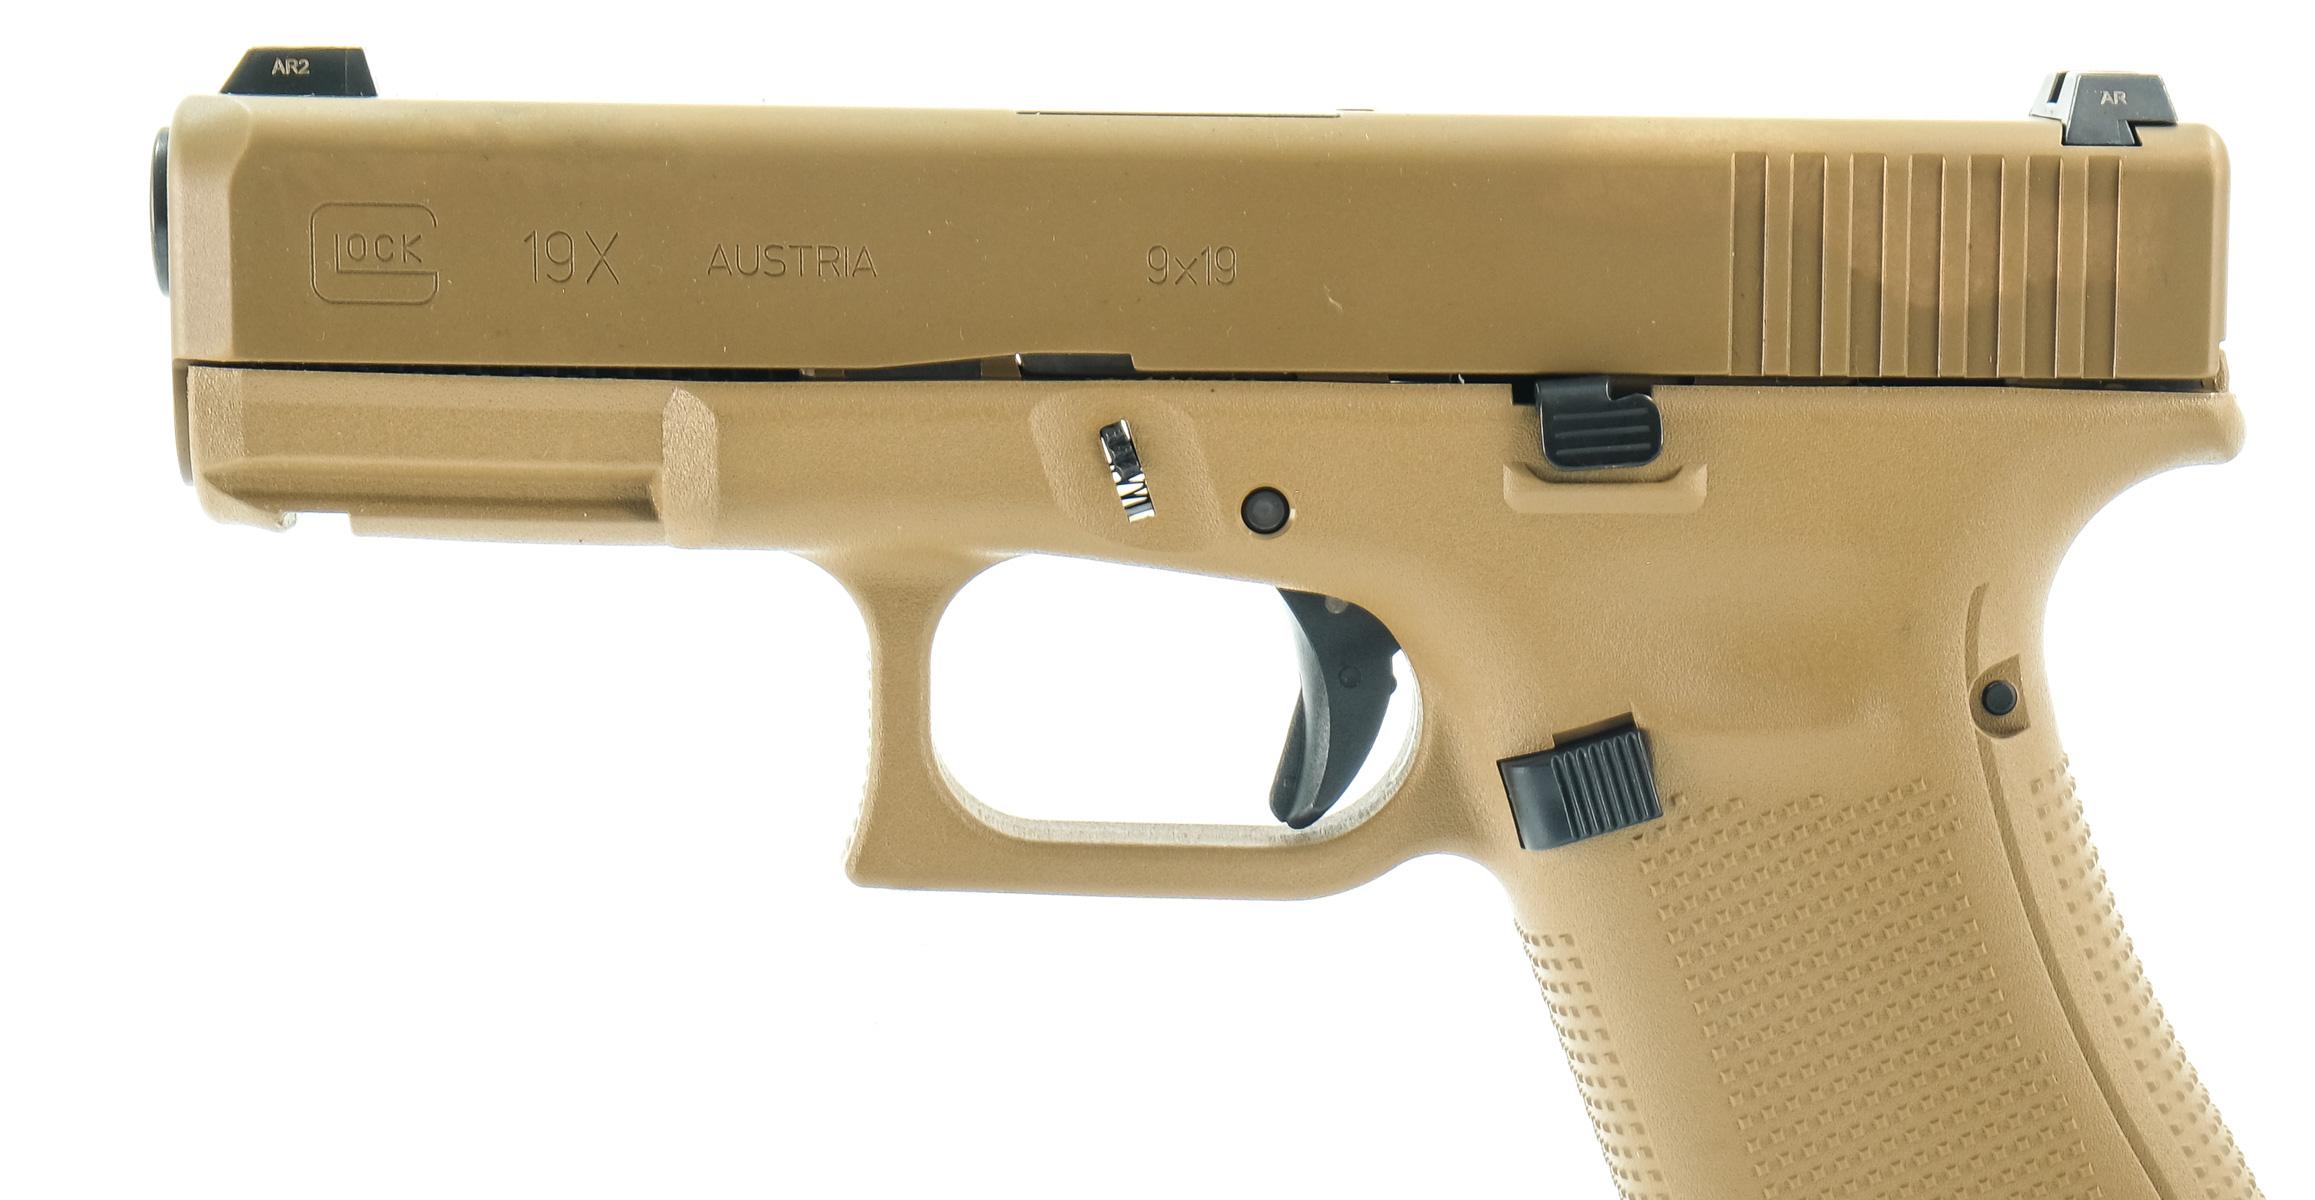 Dual Glock 19x Pistol Deployment Kit